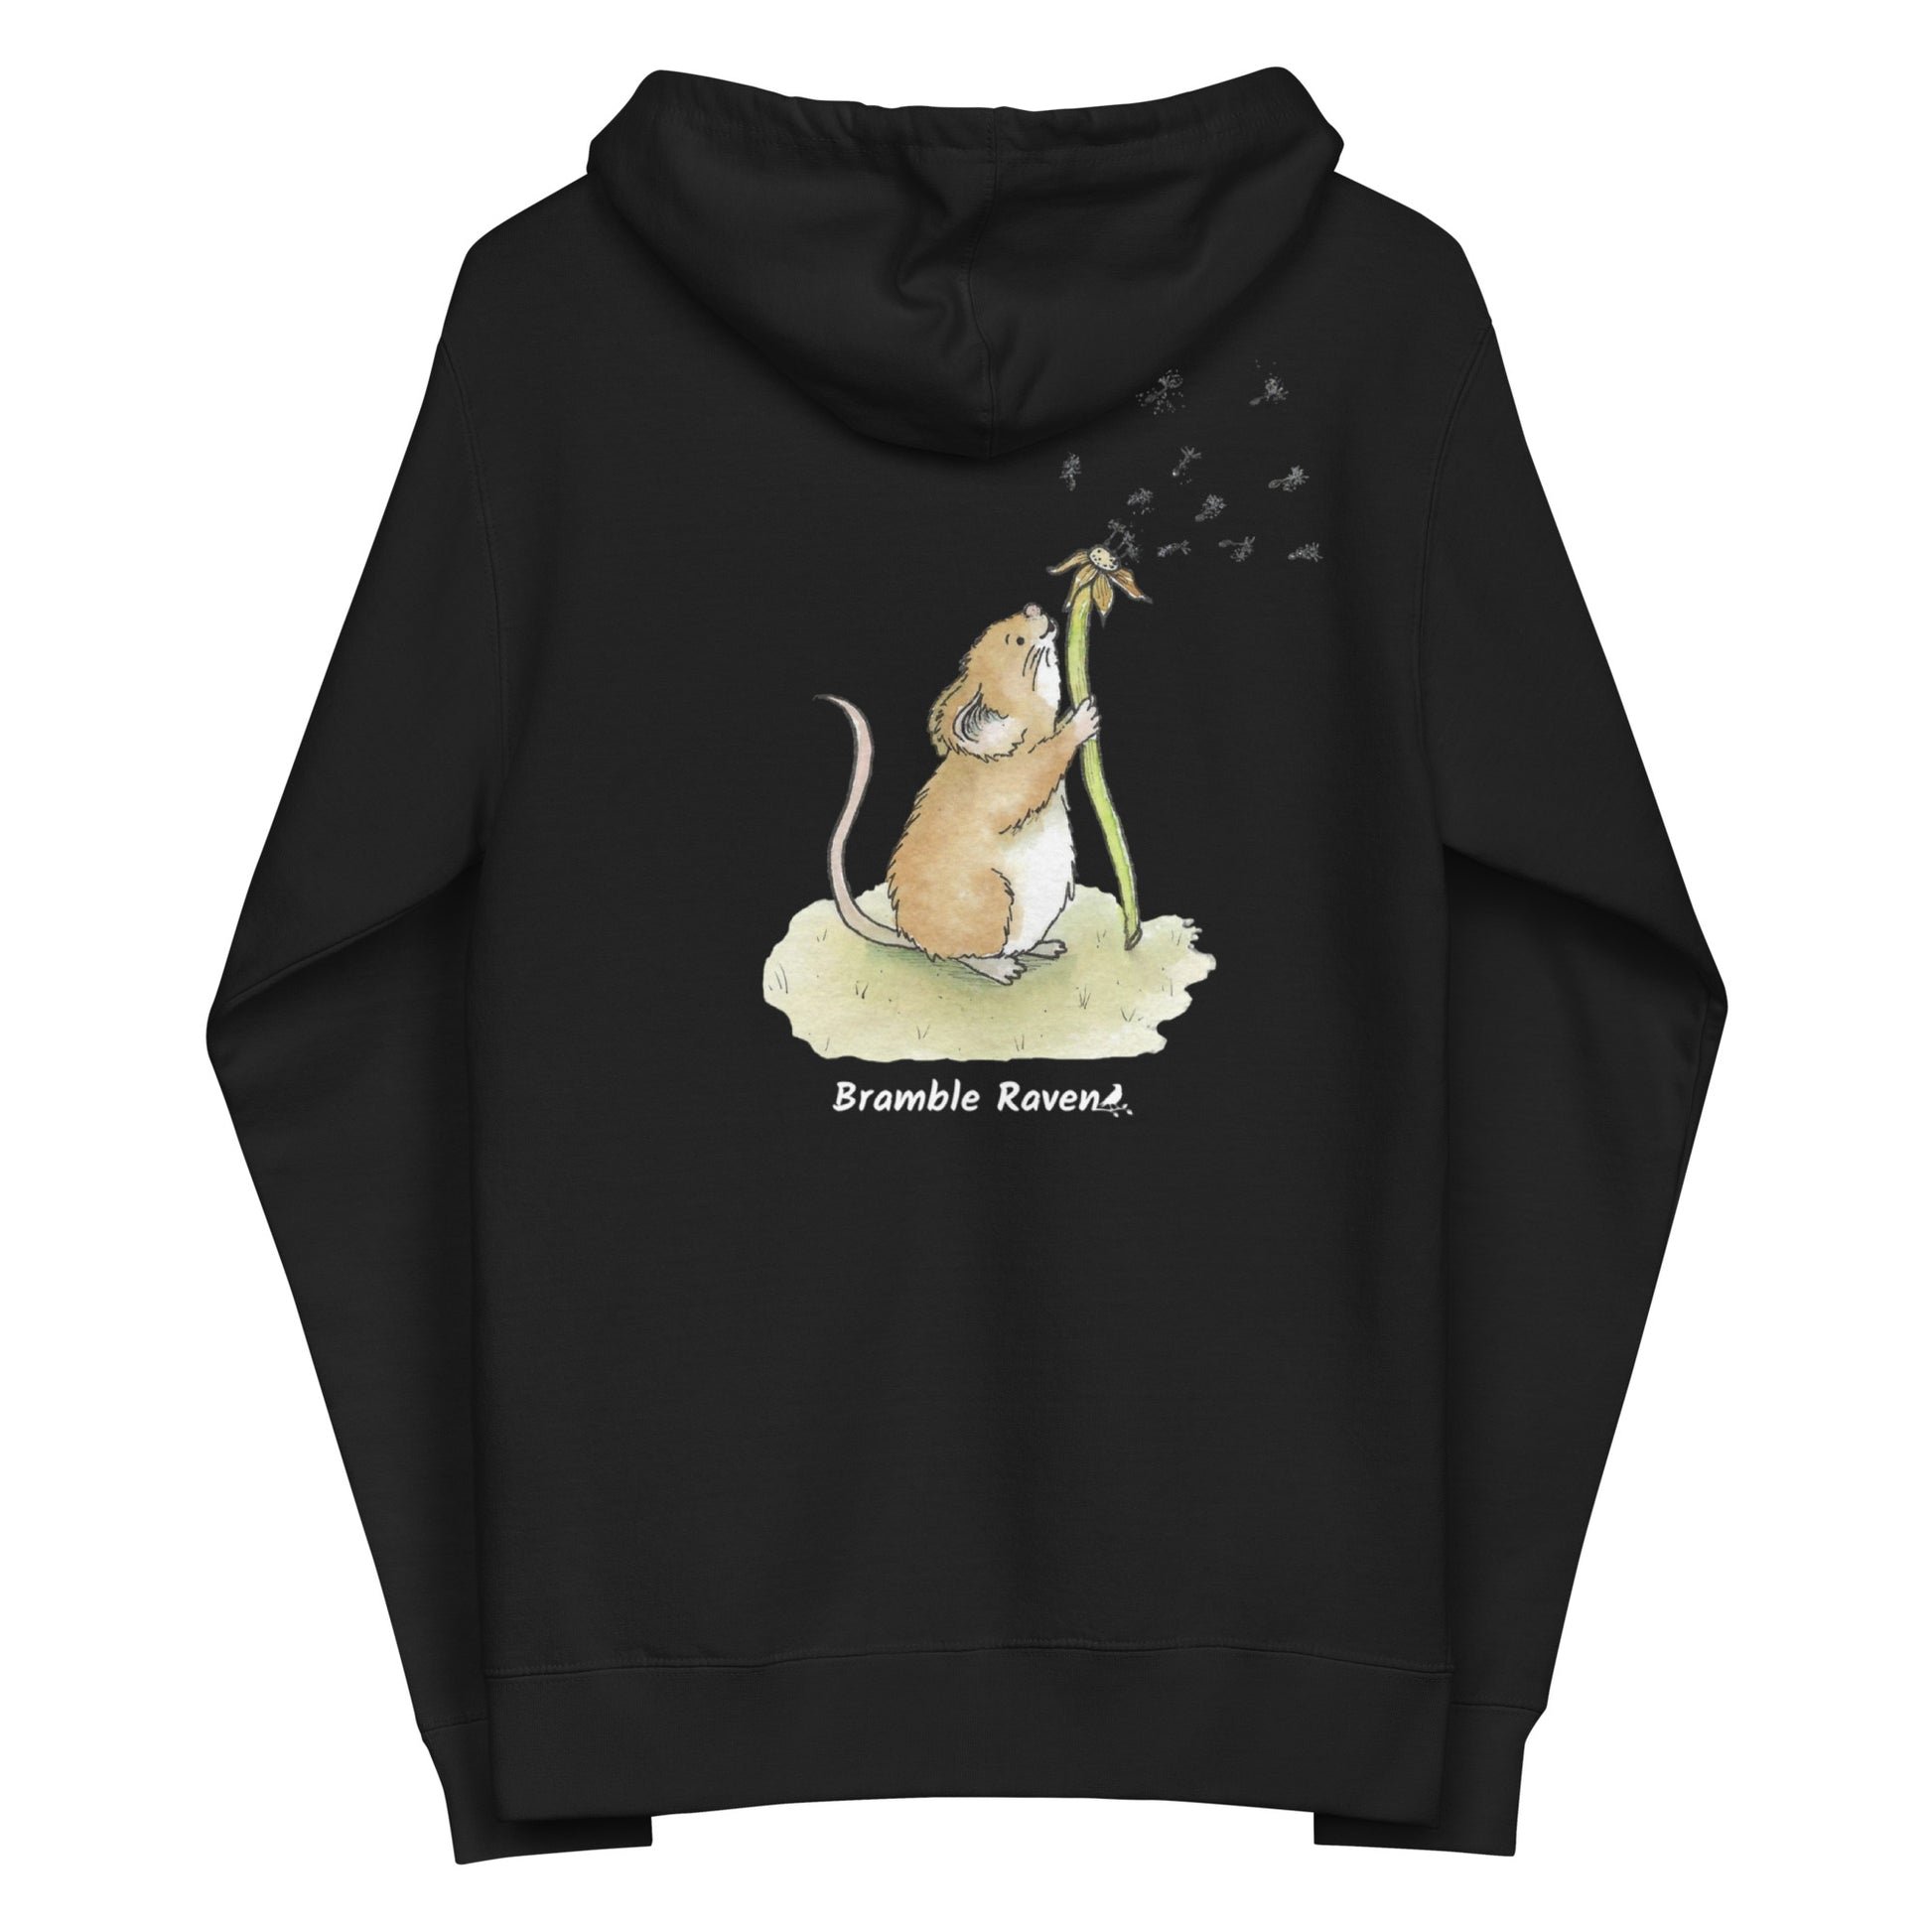 Dandelion wish design of cute watercolor mouse blowing dandelion seeds on the back of a black fleece zip up hoodie